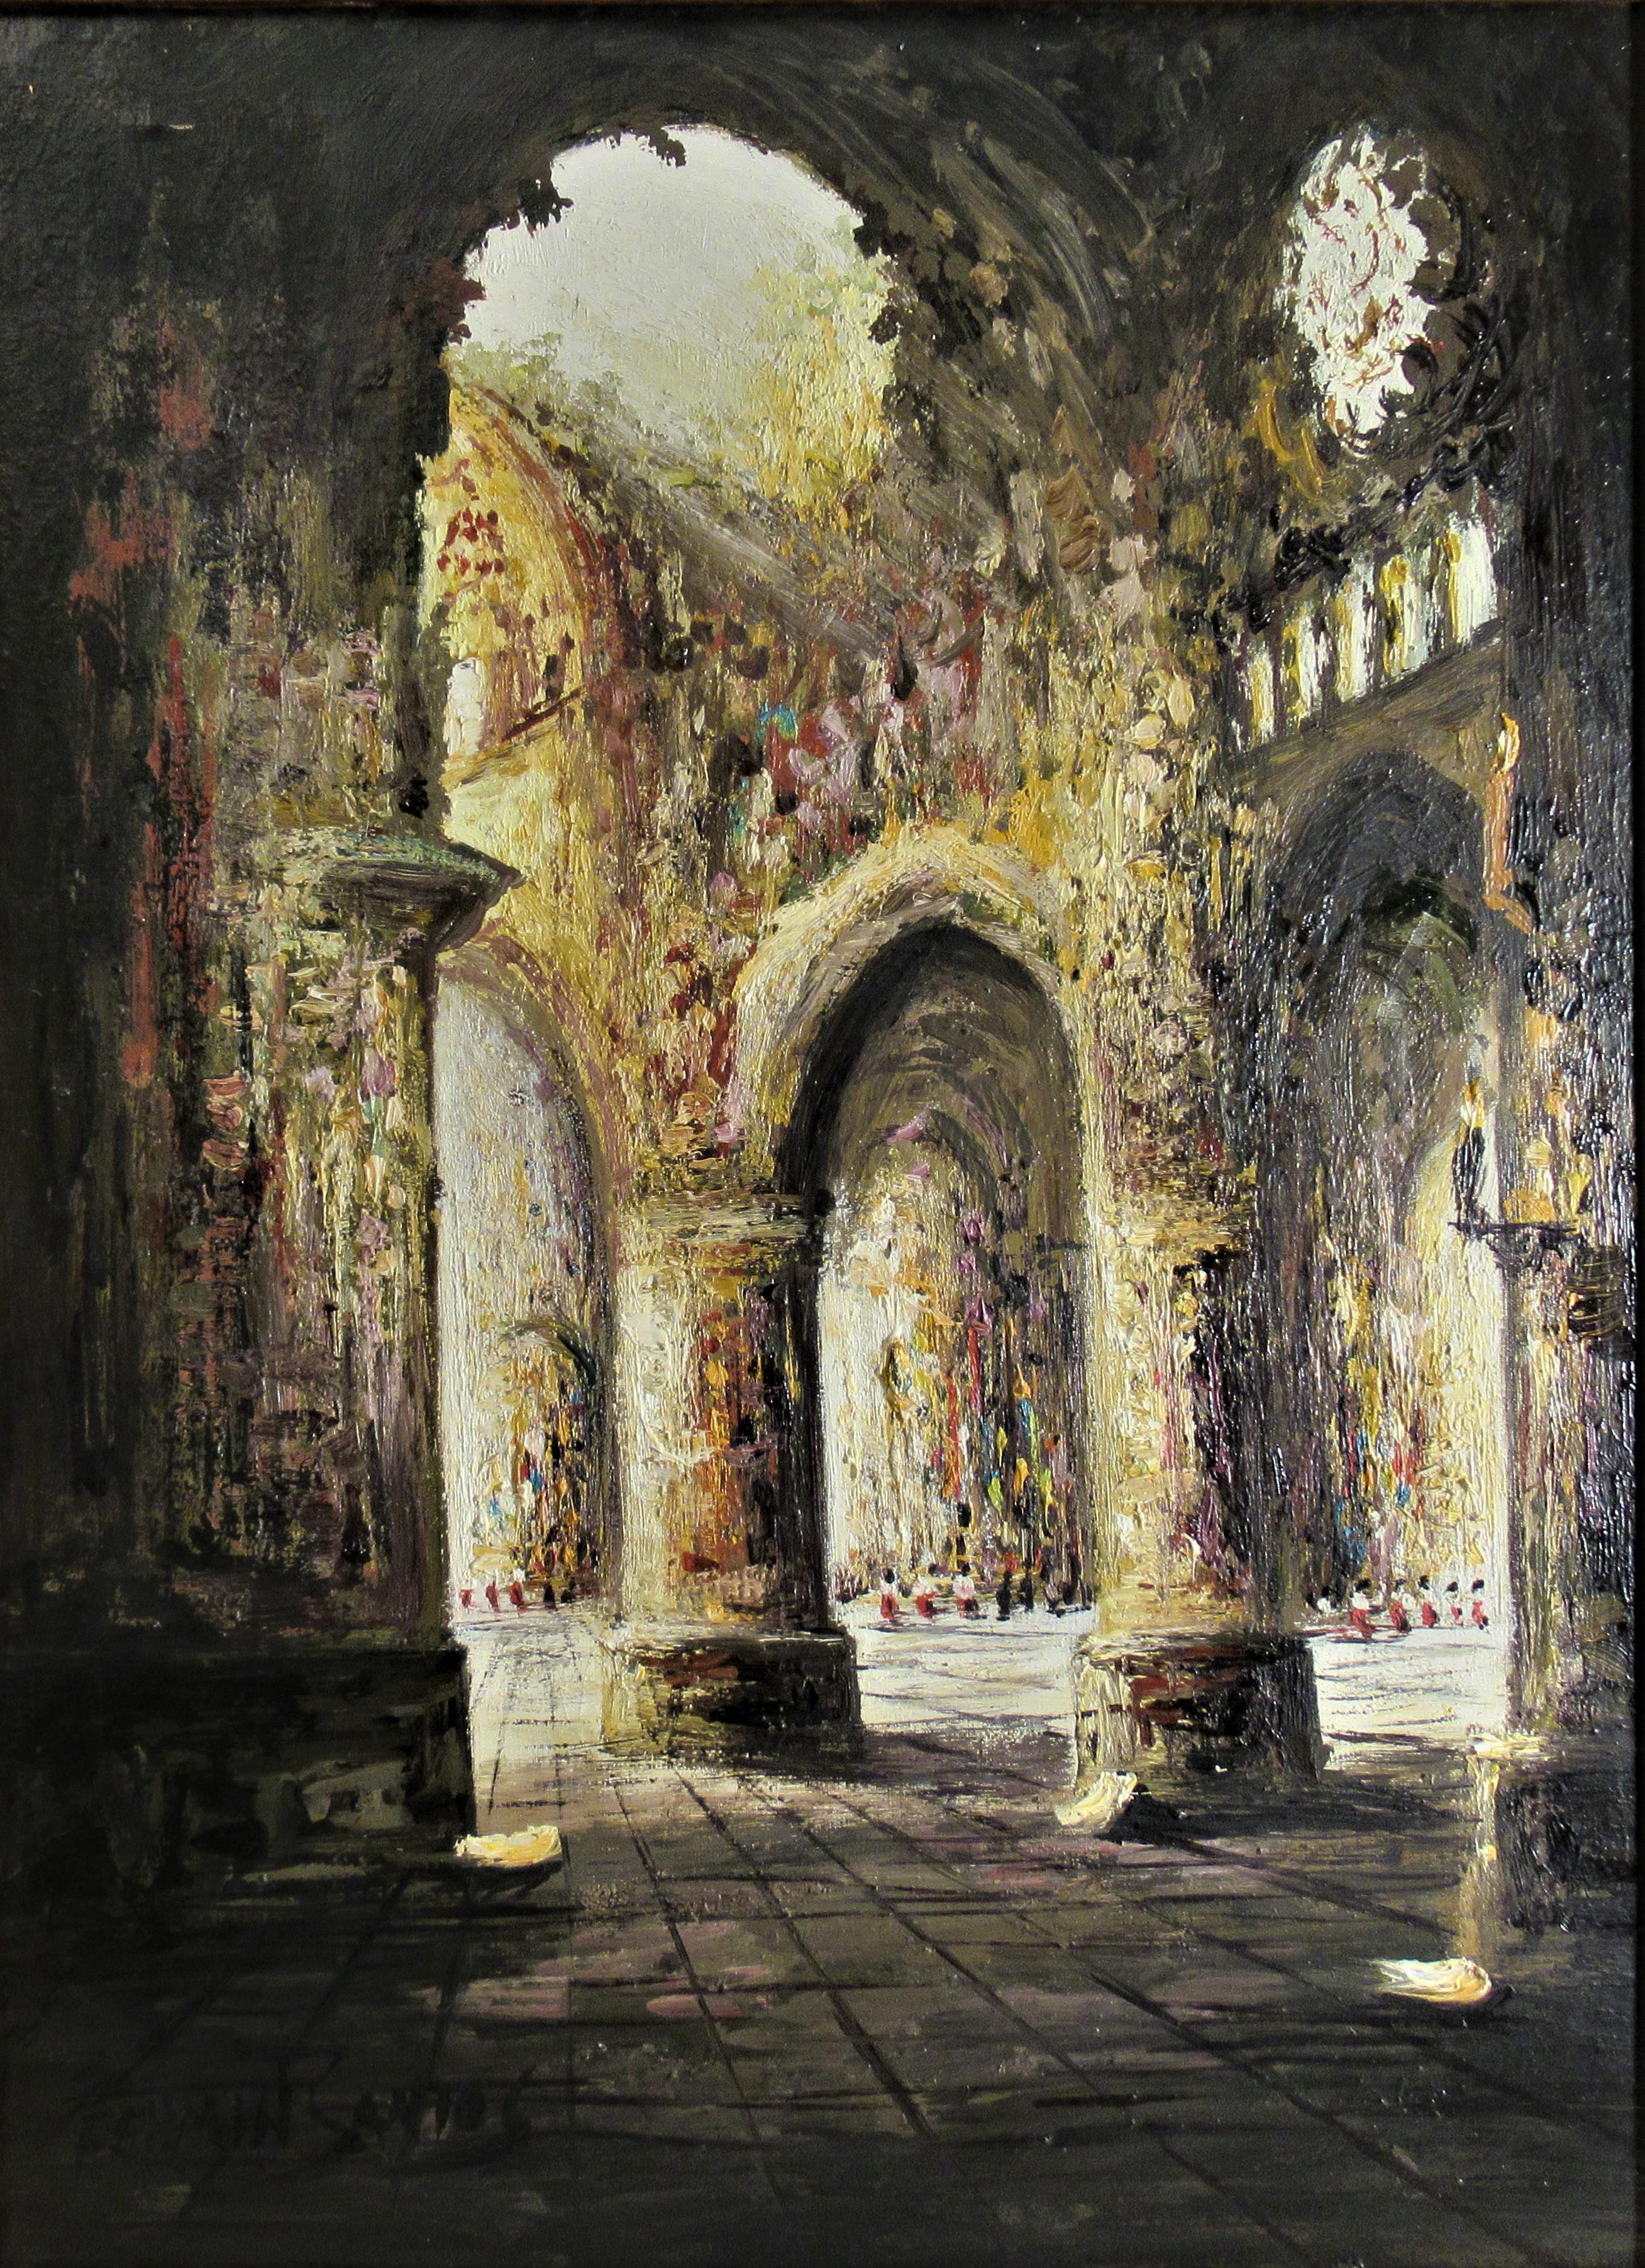 Catedral de Toledo, Espana - Painting by Fermin Santos Alcalde